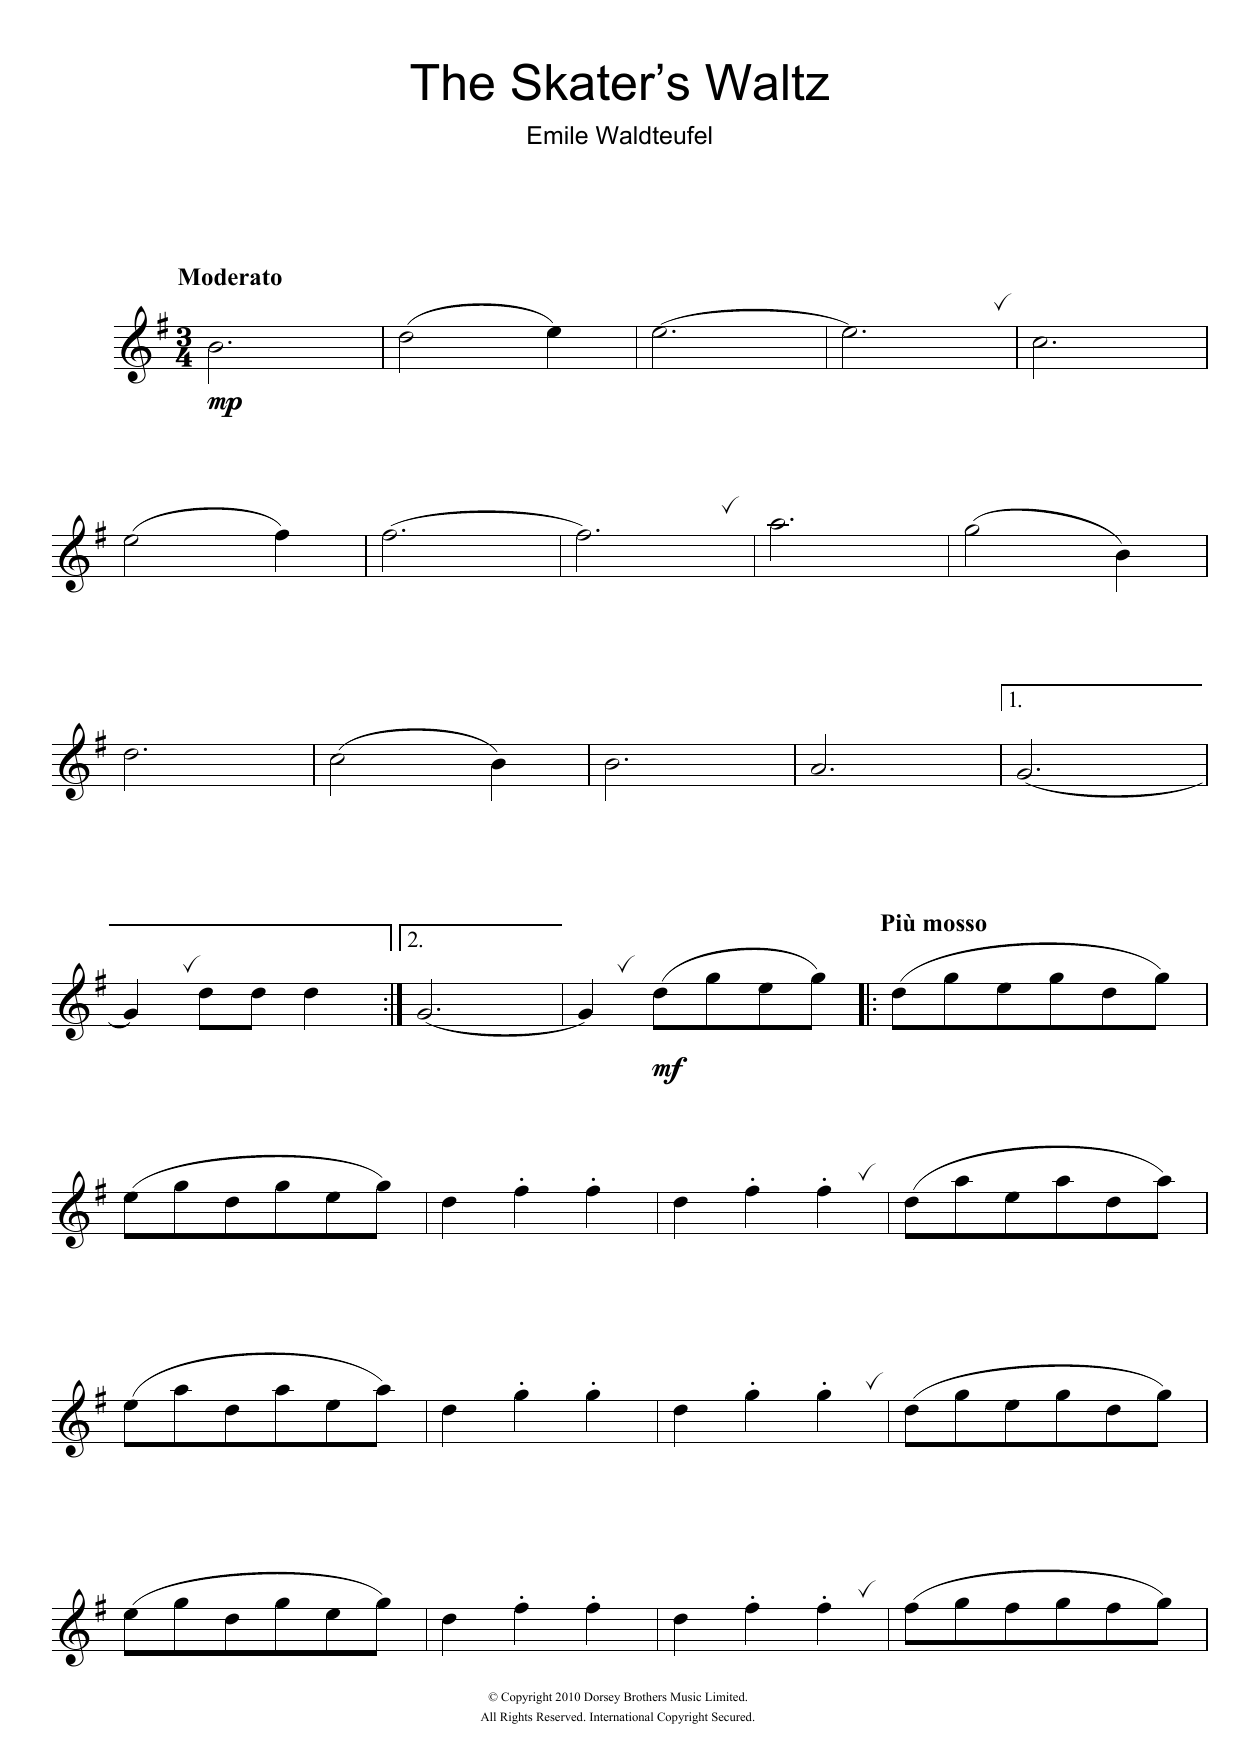 Emile Waldteufel The Skater's Waltz Sheet Music Notes & Chords for Alto Saxophone - Download or Print PDF